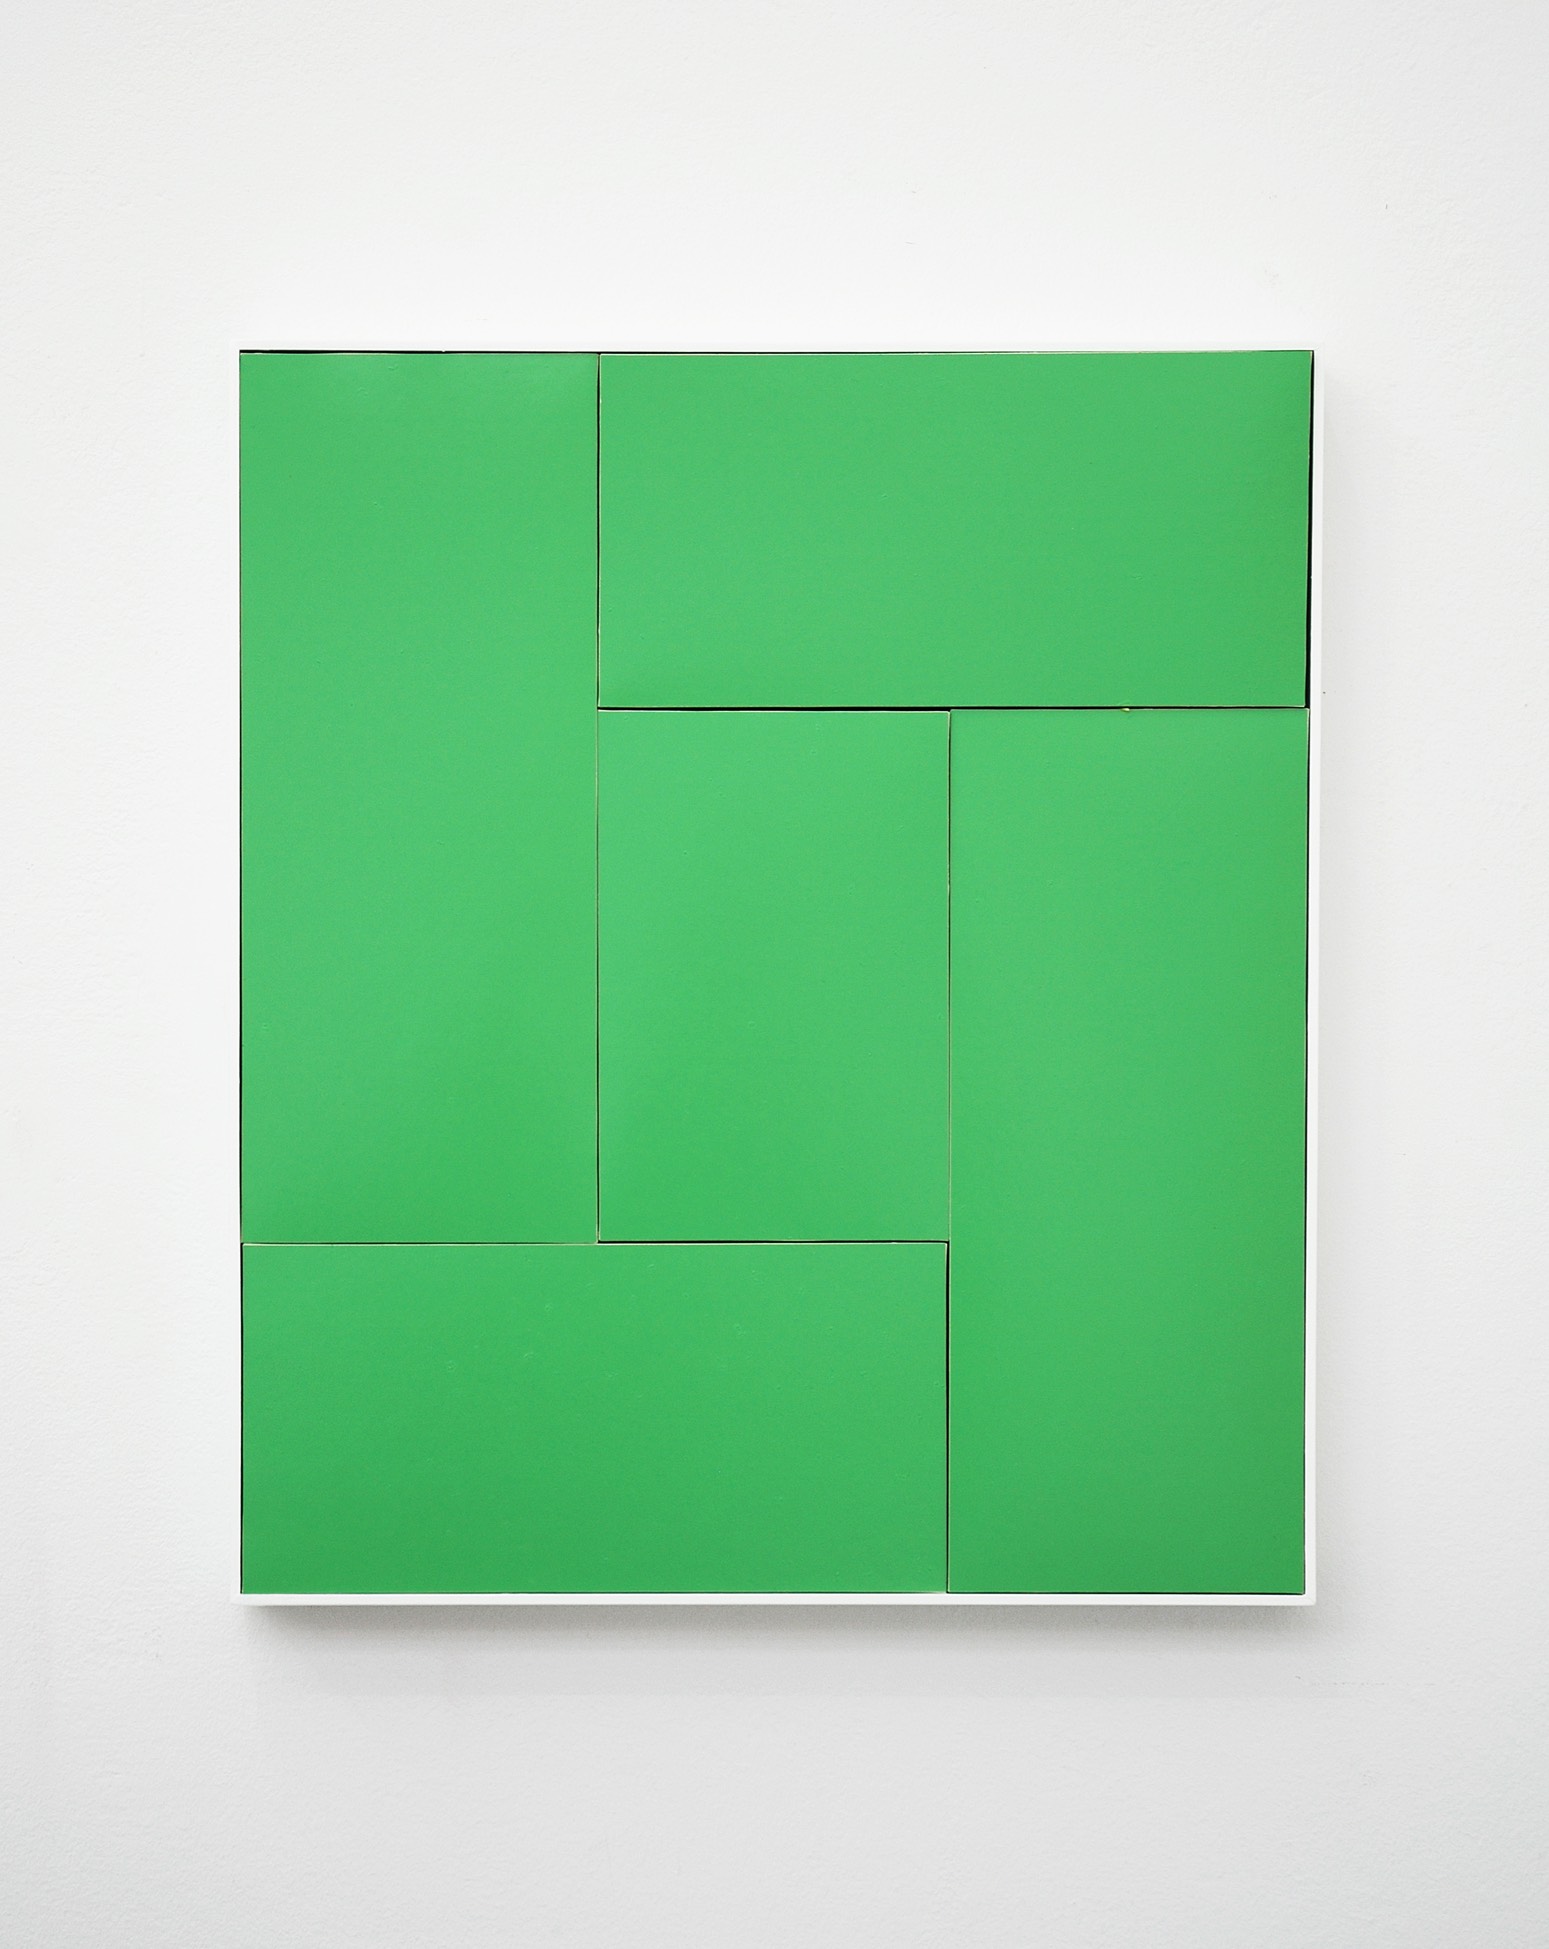 o.T. (Green Leave), 2012